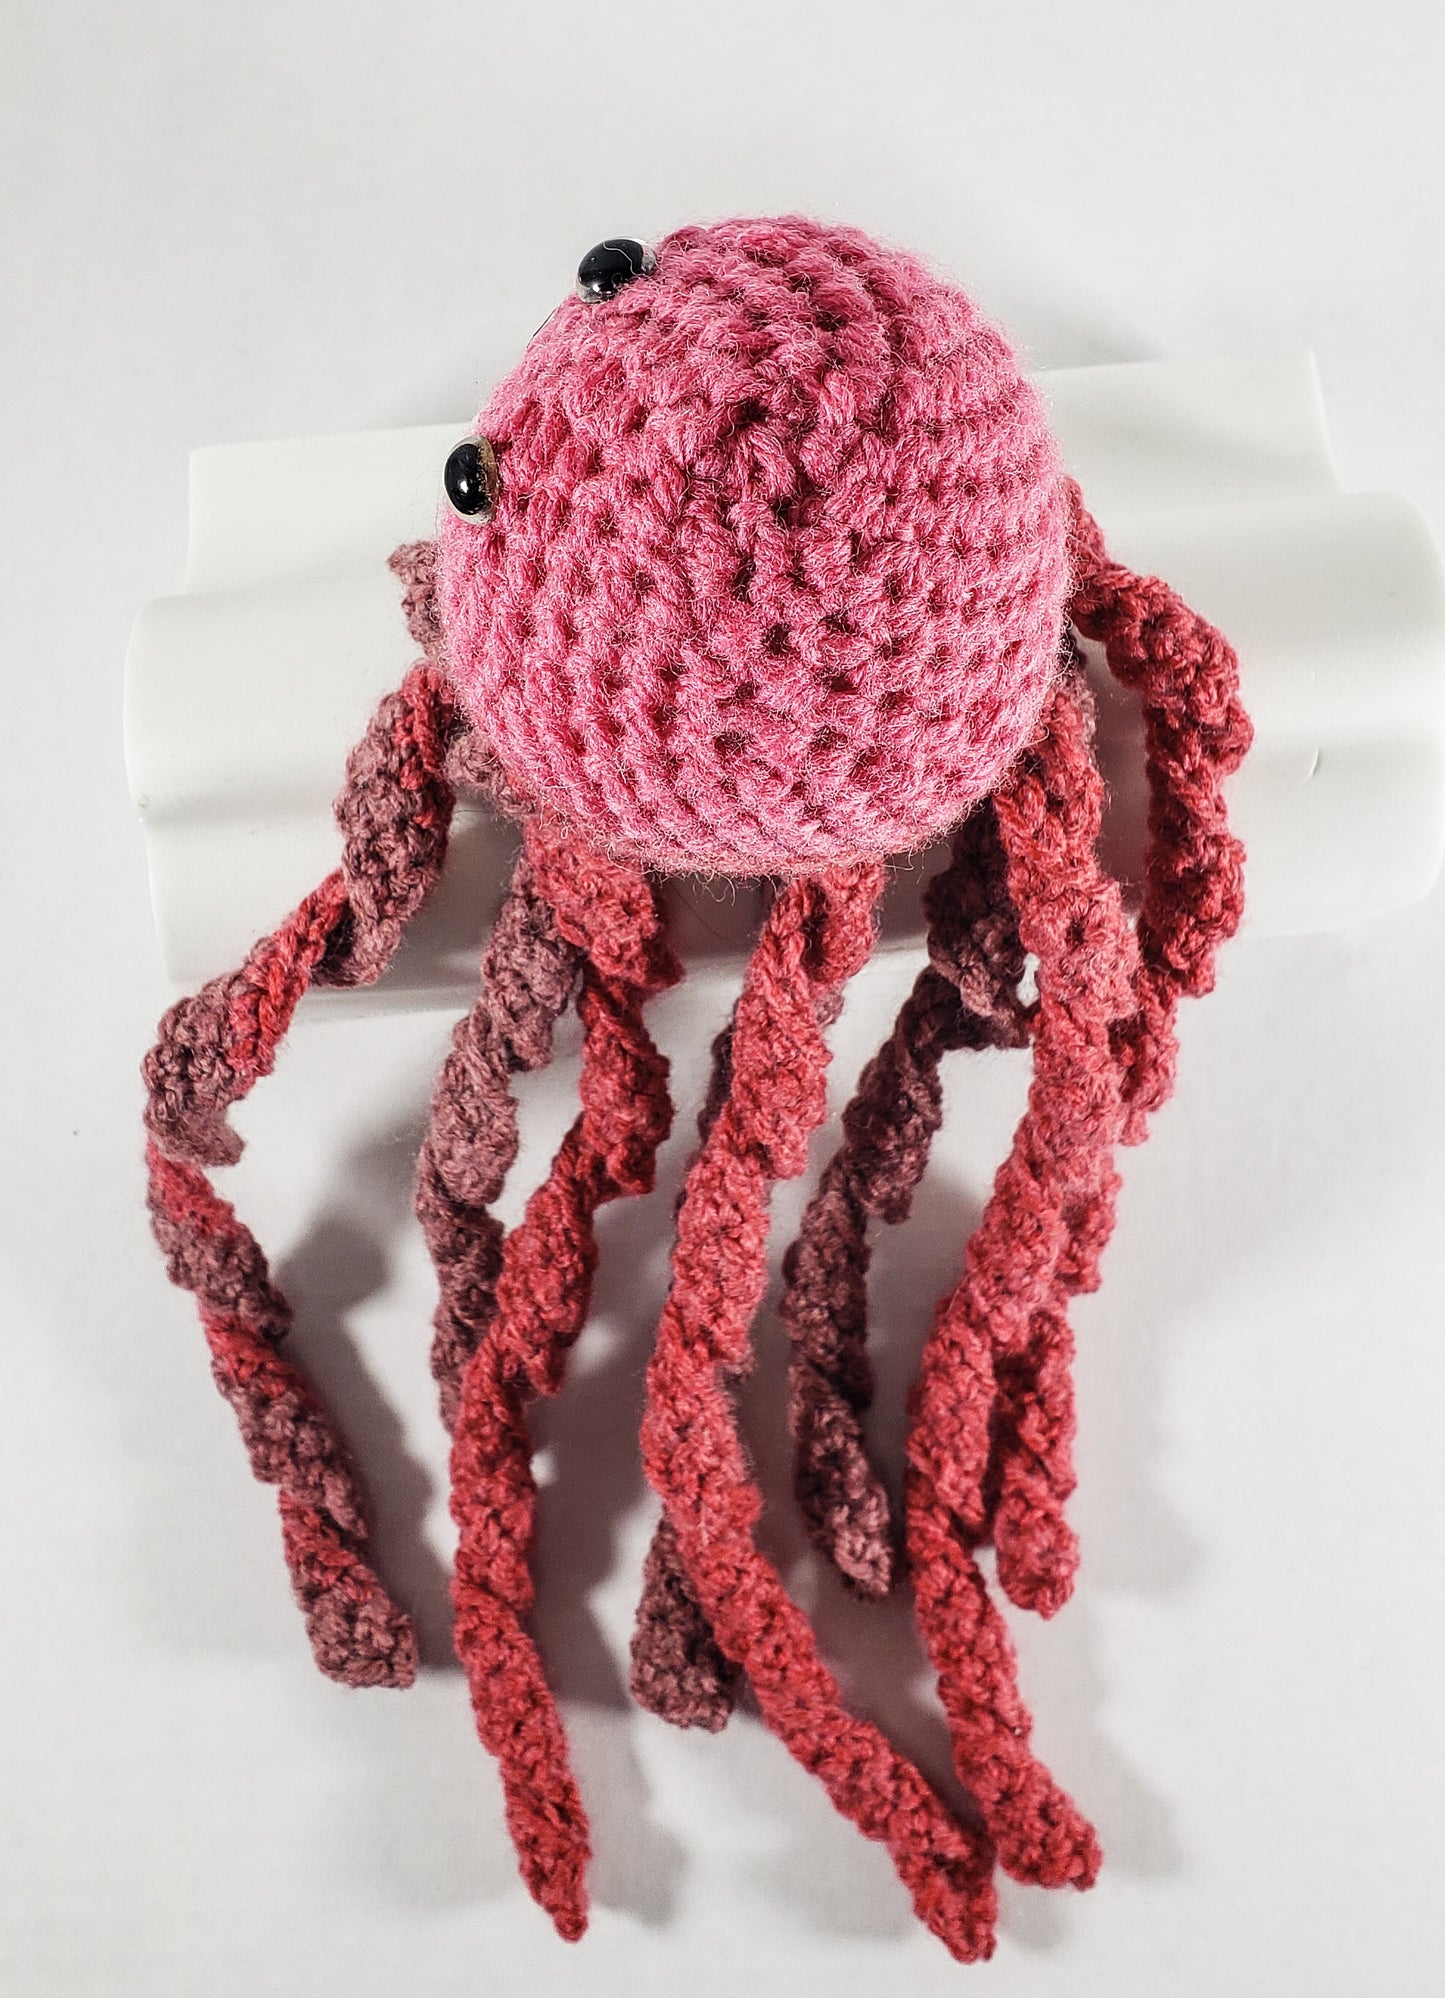 Crochet Octopus Stuffed Animal - Chocolate Strawberry